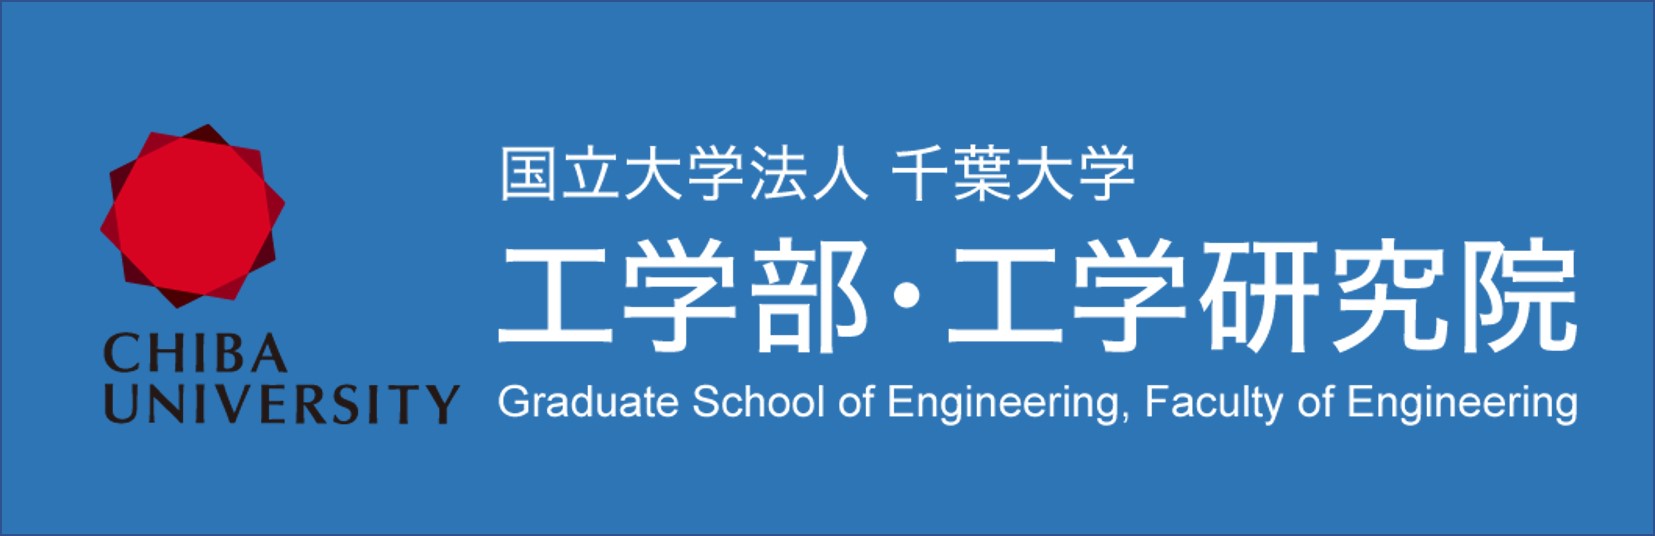 logo_Engineering.jpg